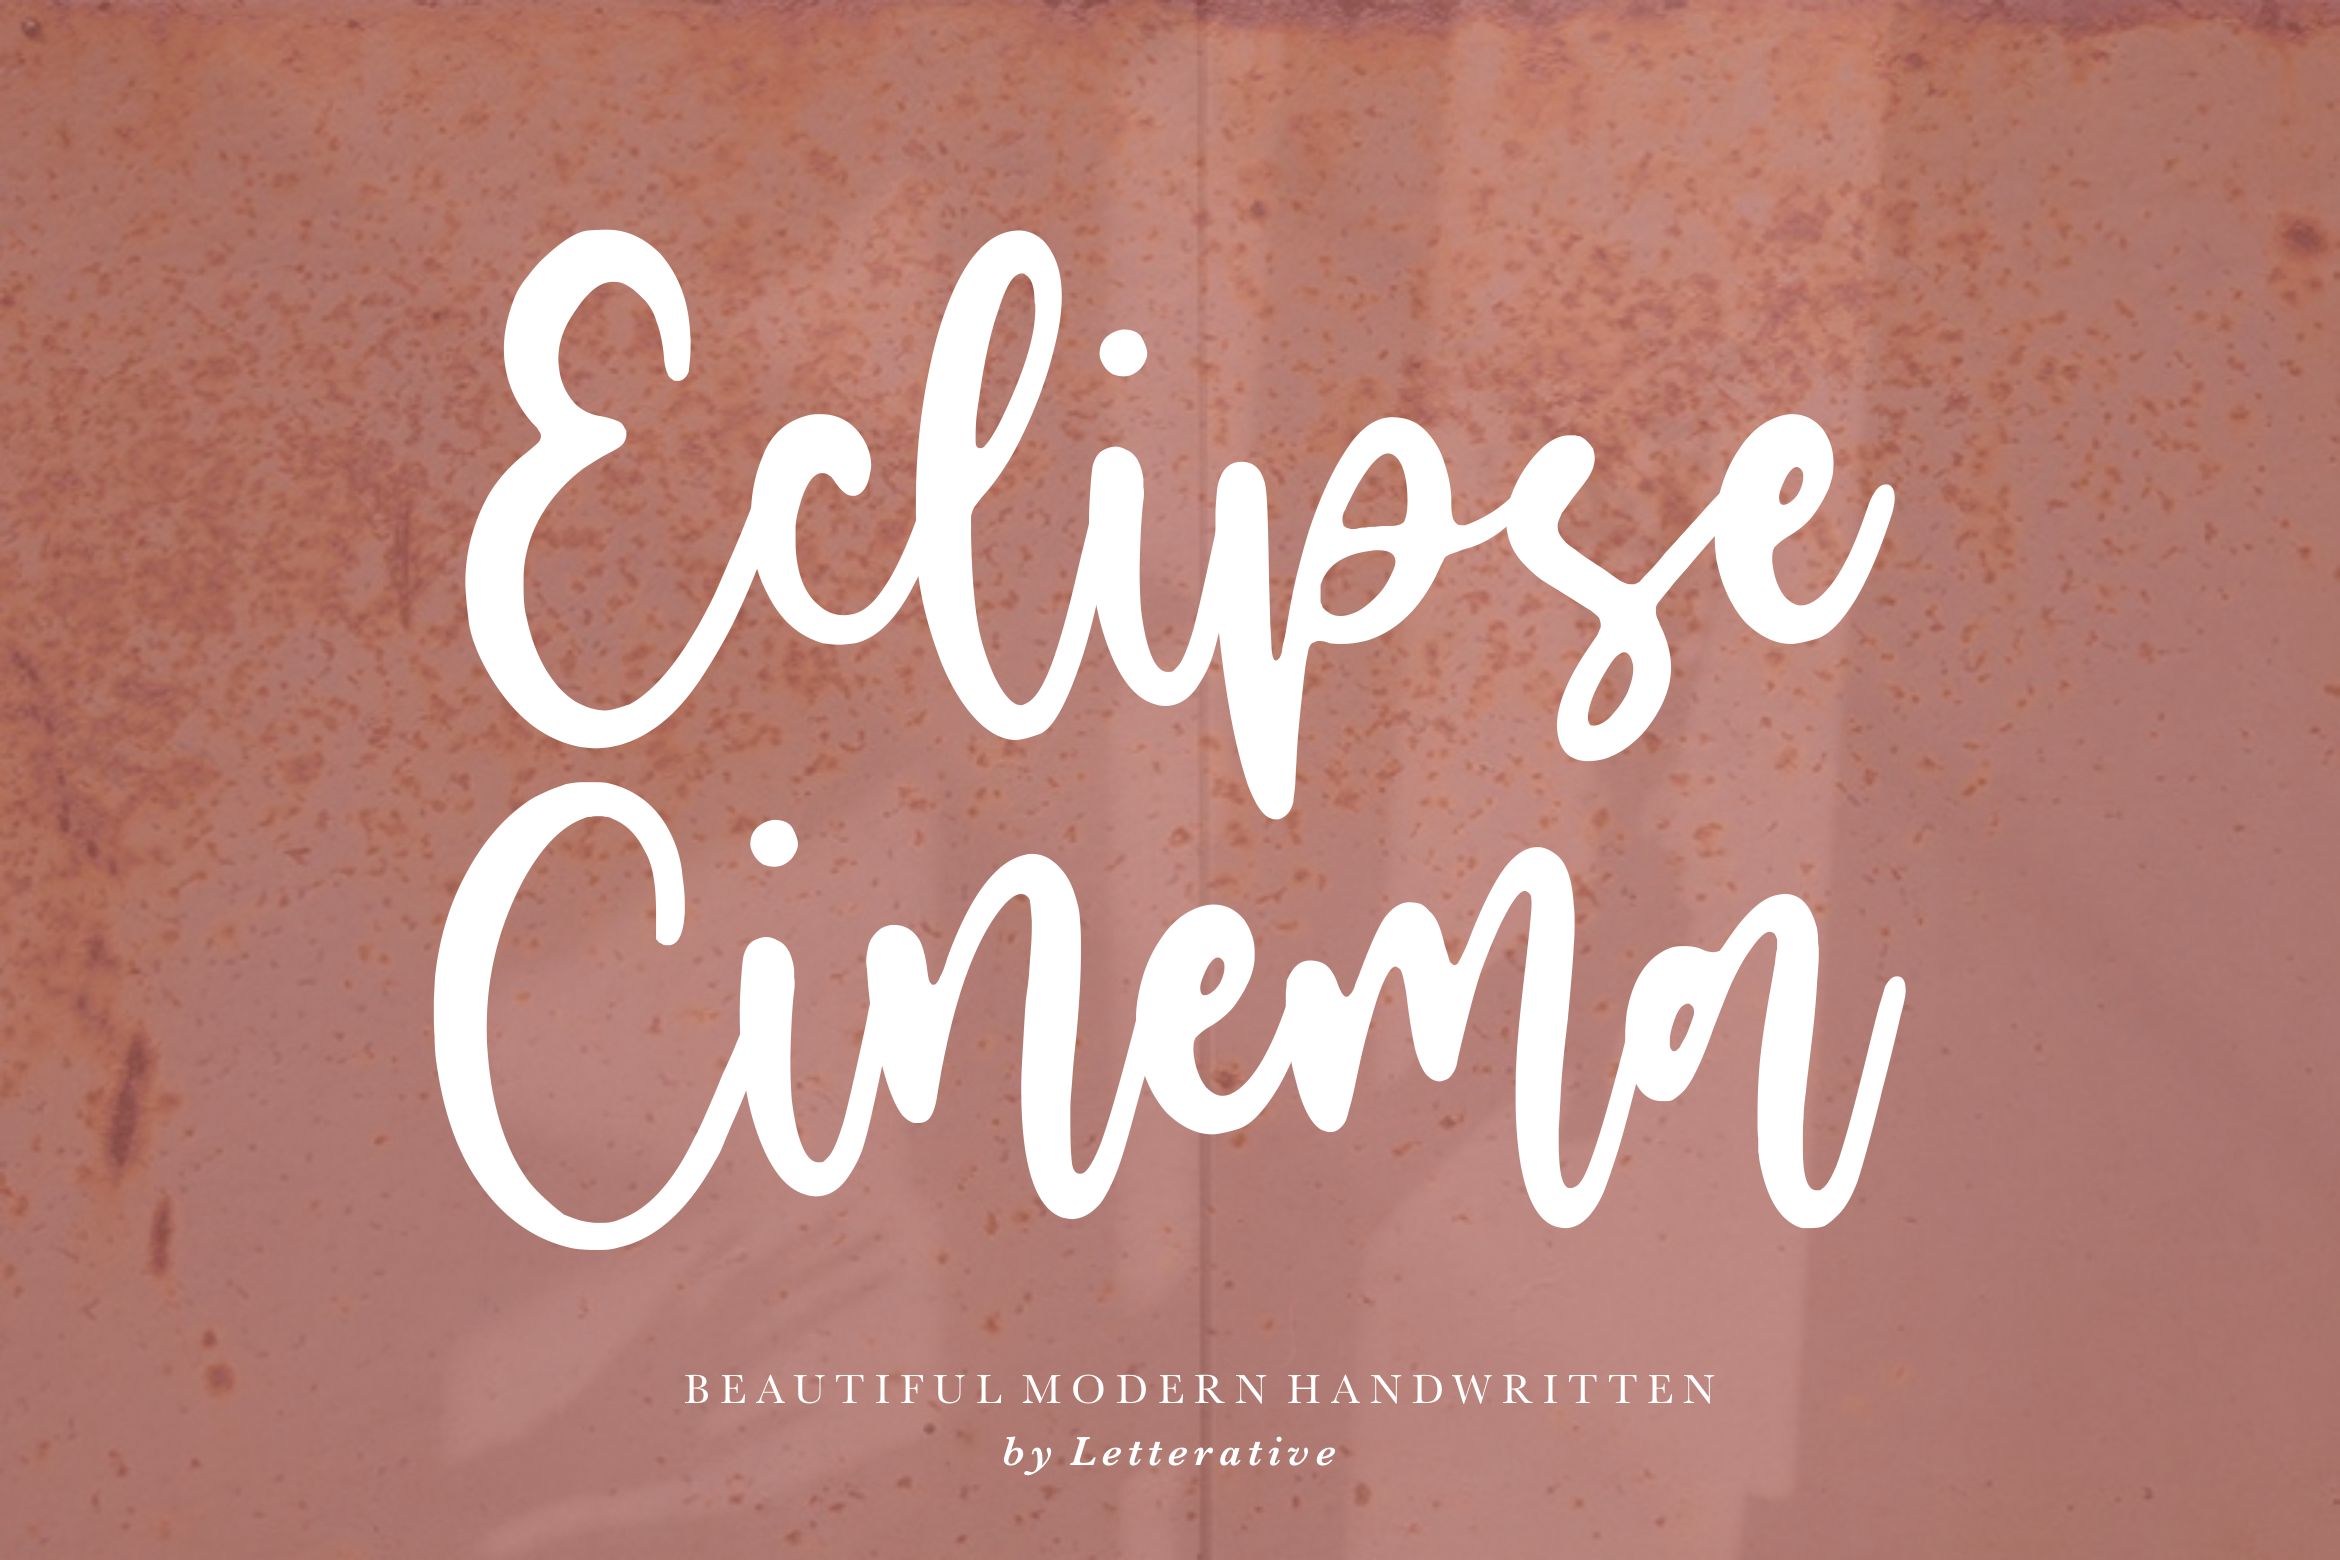 Eclipse Cinema